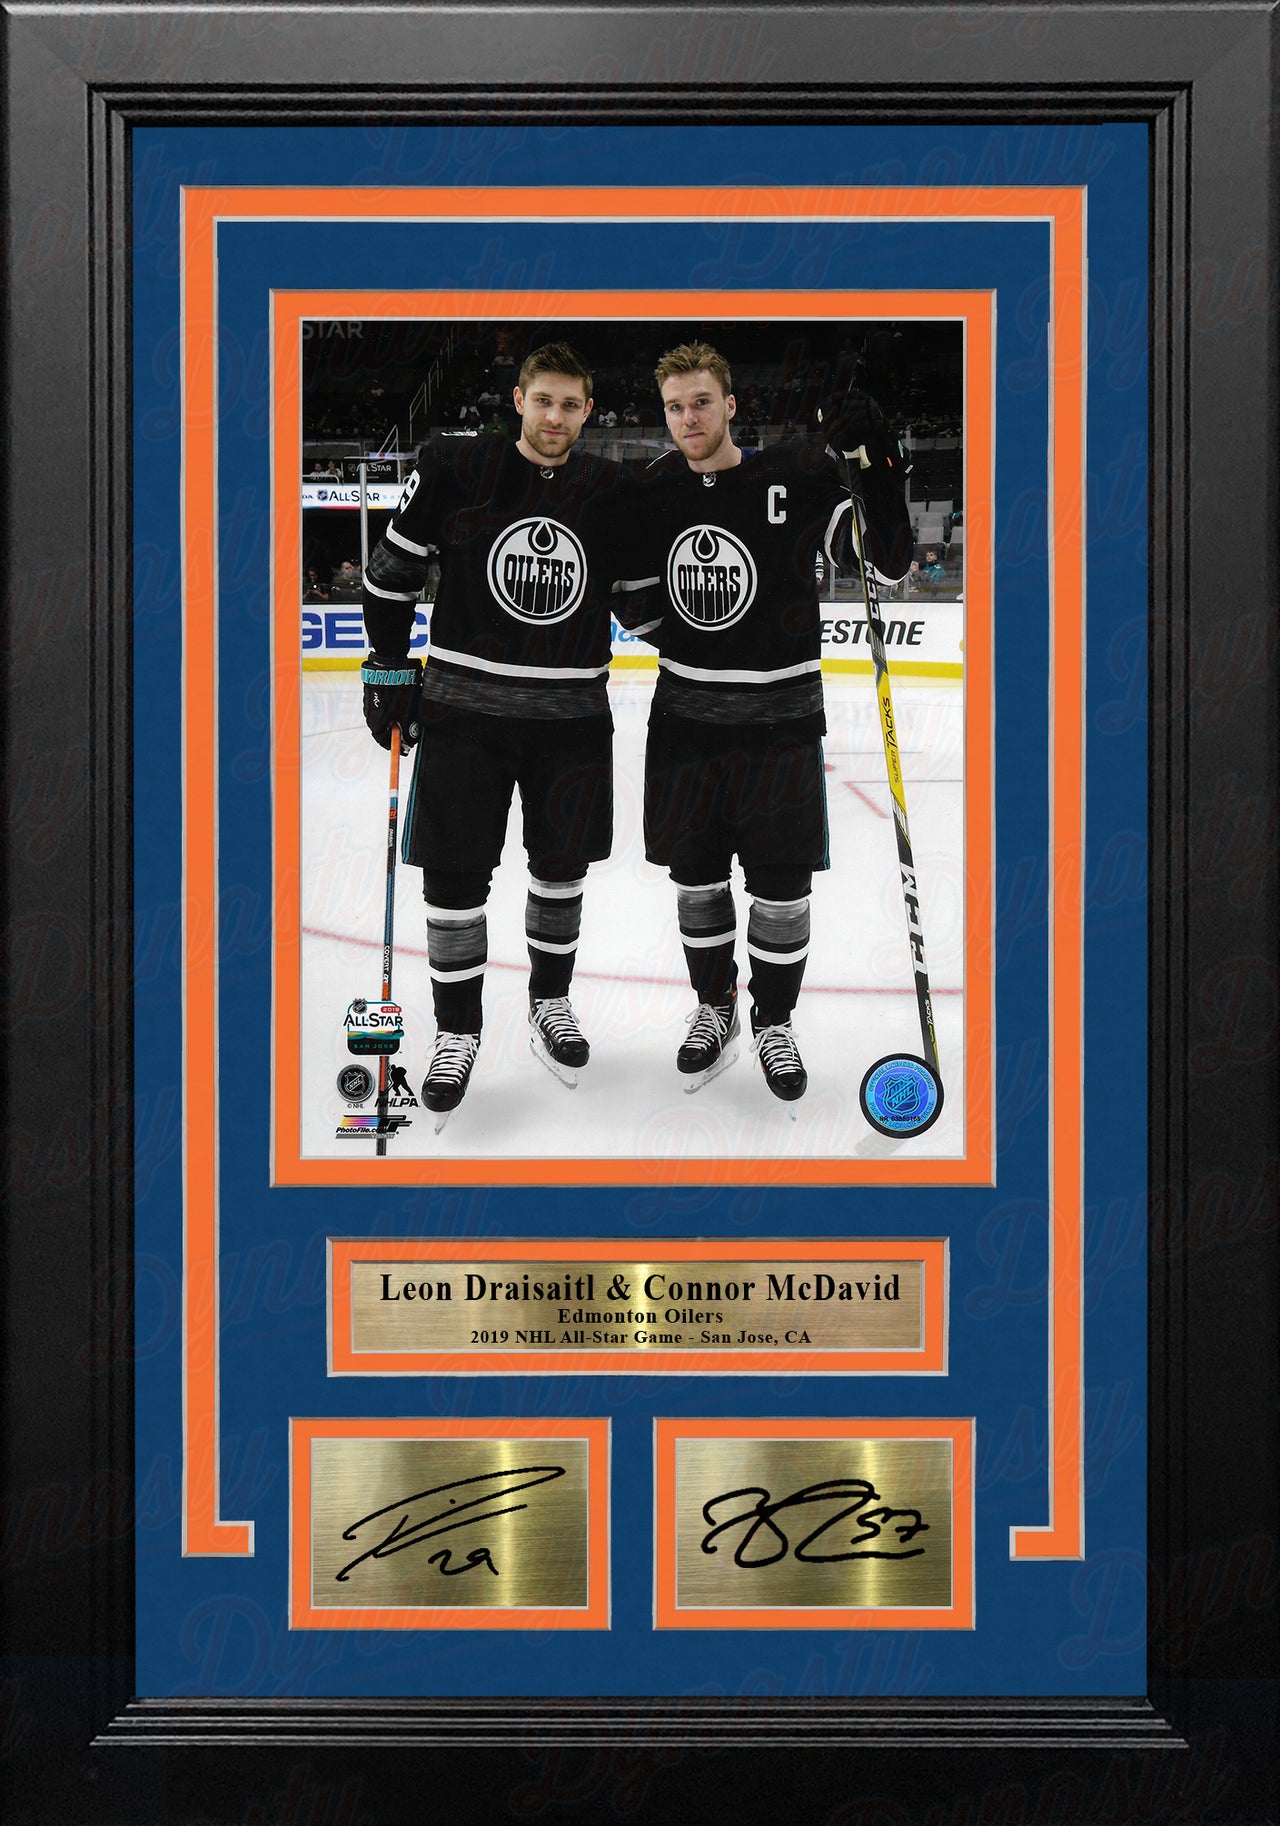 Leon Draisaitl & Connor McDavid Edmonton Oilers 8x10 Framed Hockey Photo with Engraved Autographs - Dynasty Sports & Framing 